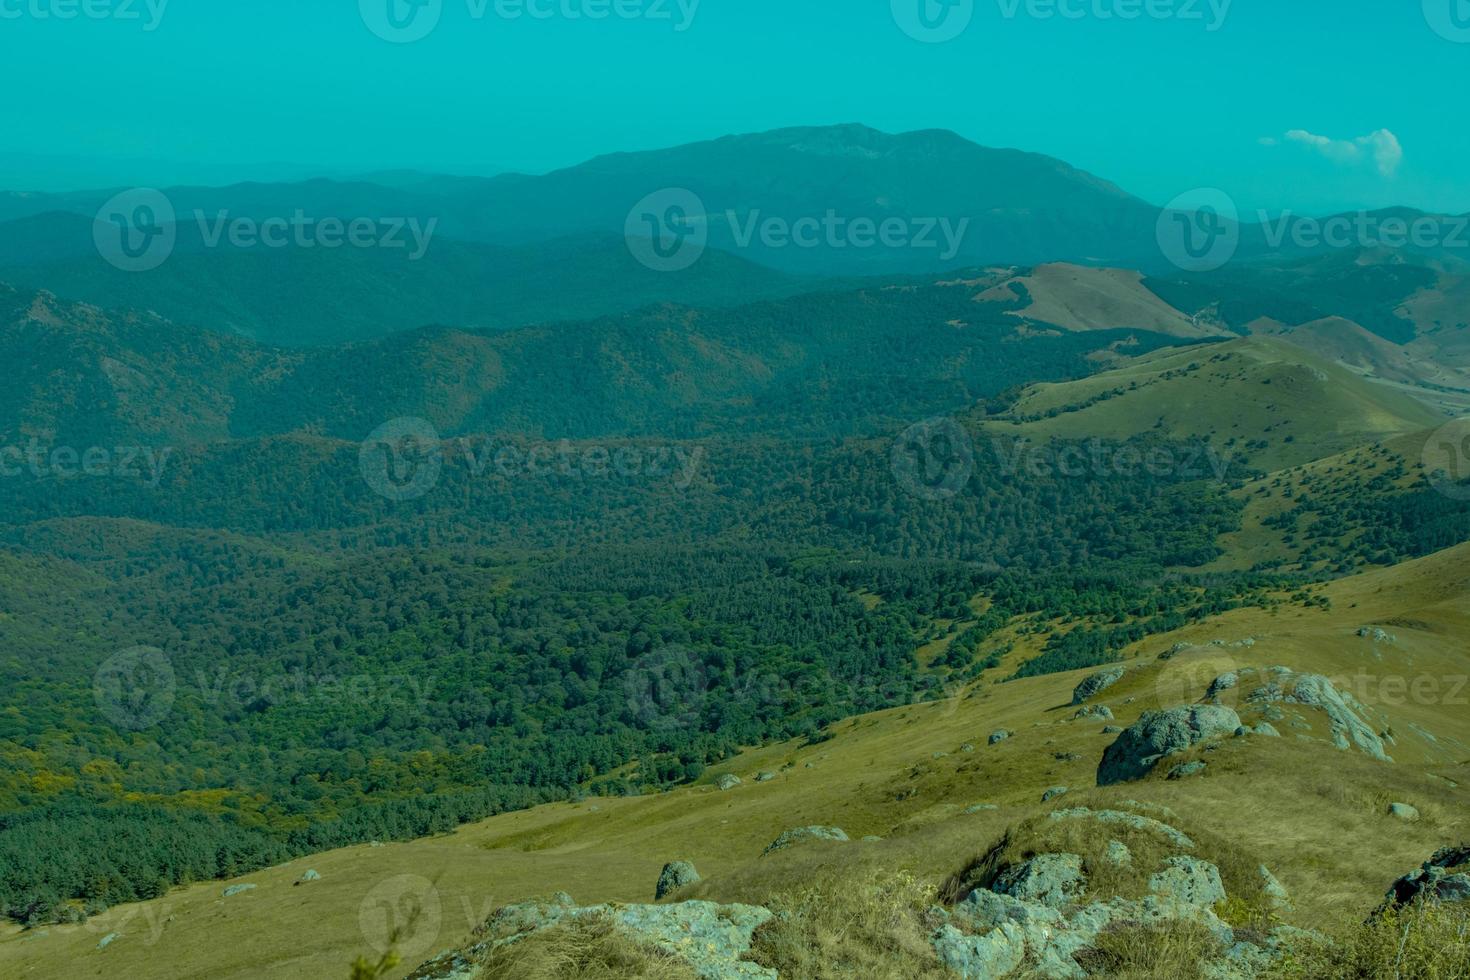 hermoso paisaje natural y montaña. cielo azul. armenia, provincia de lori foto